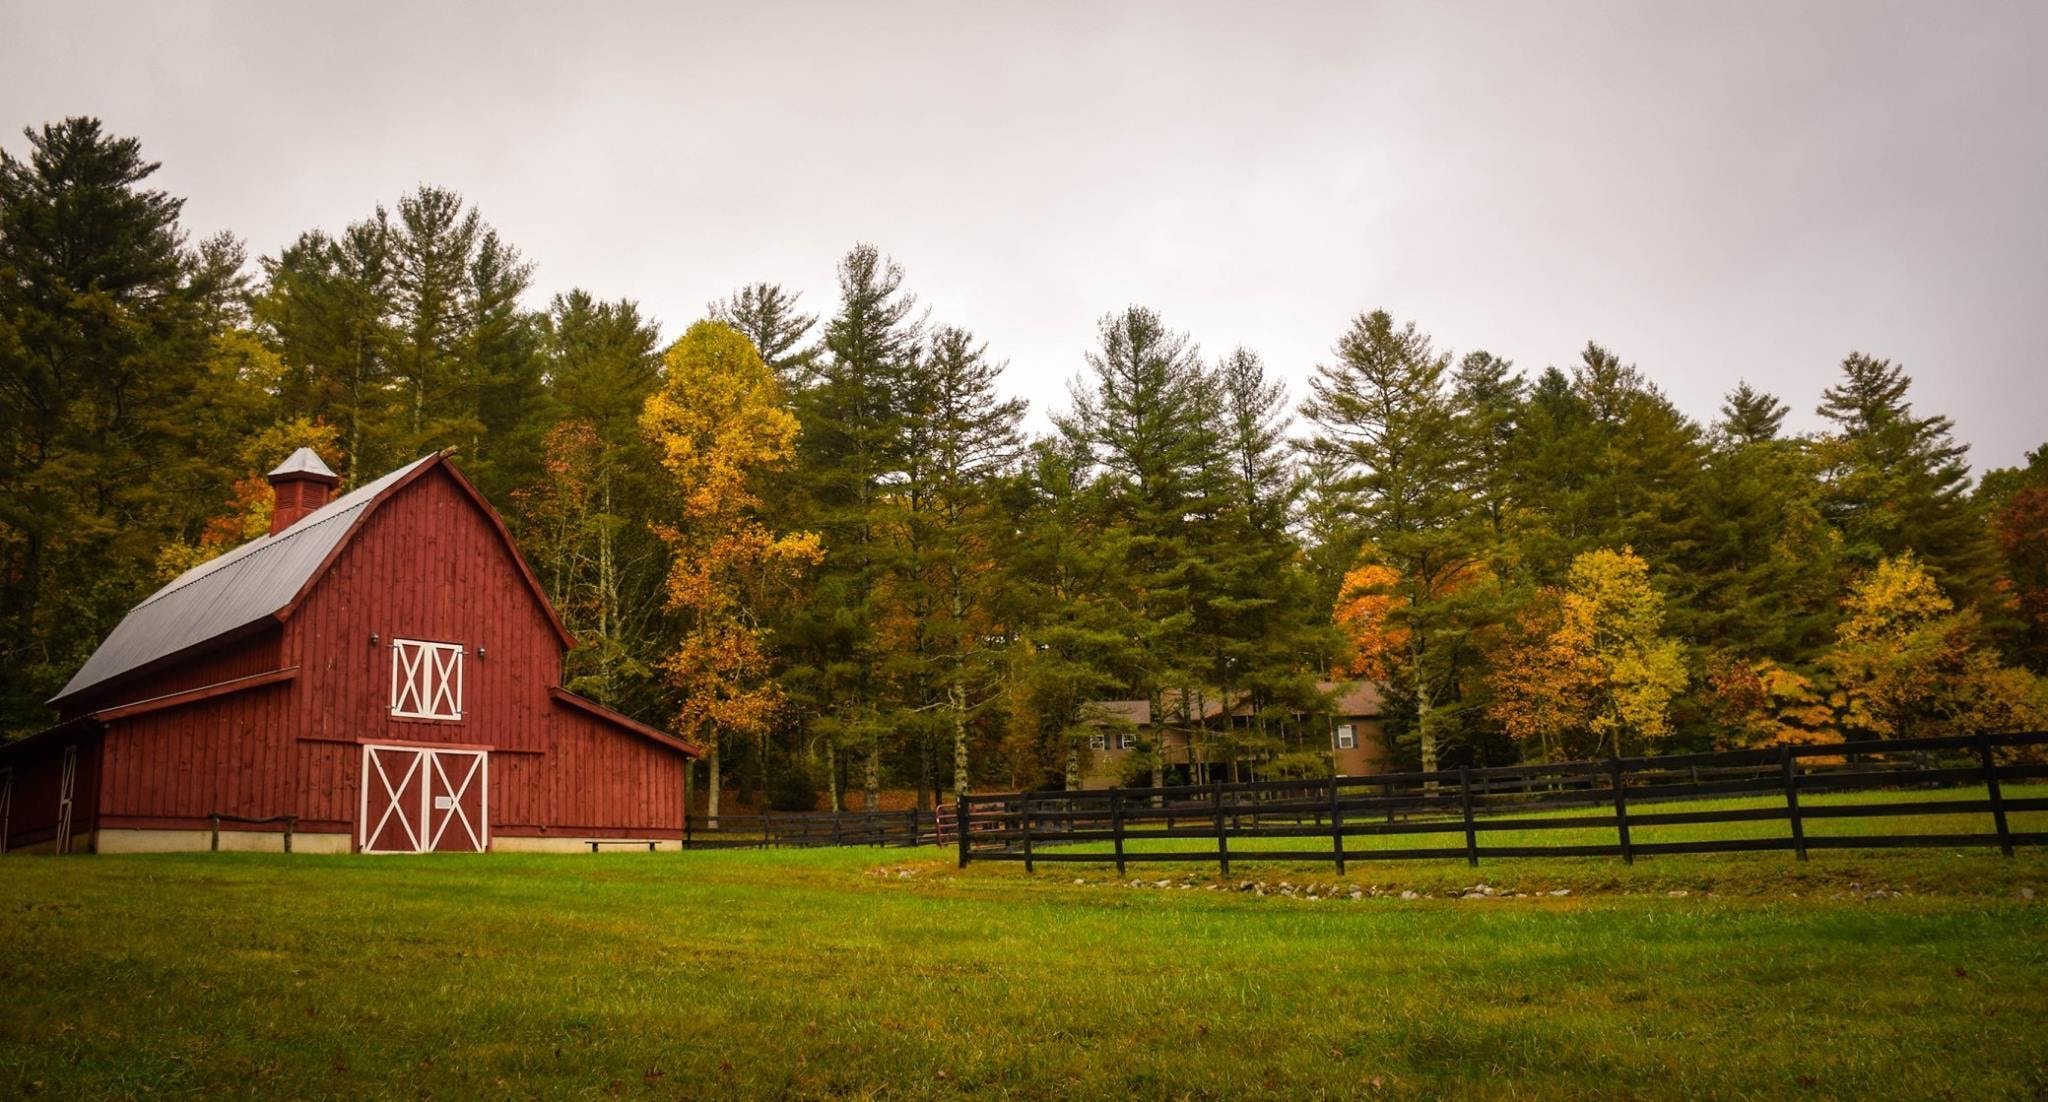 A barn beside a forest | Source: Unsplash.com